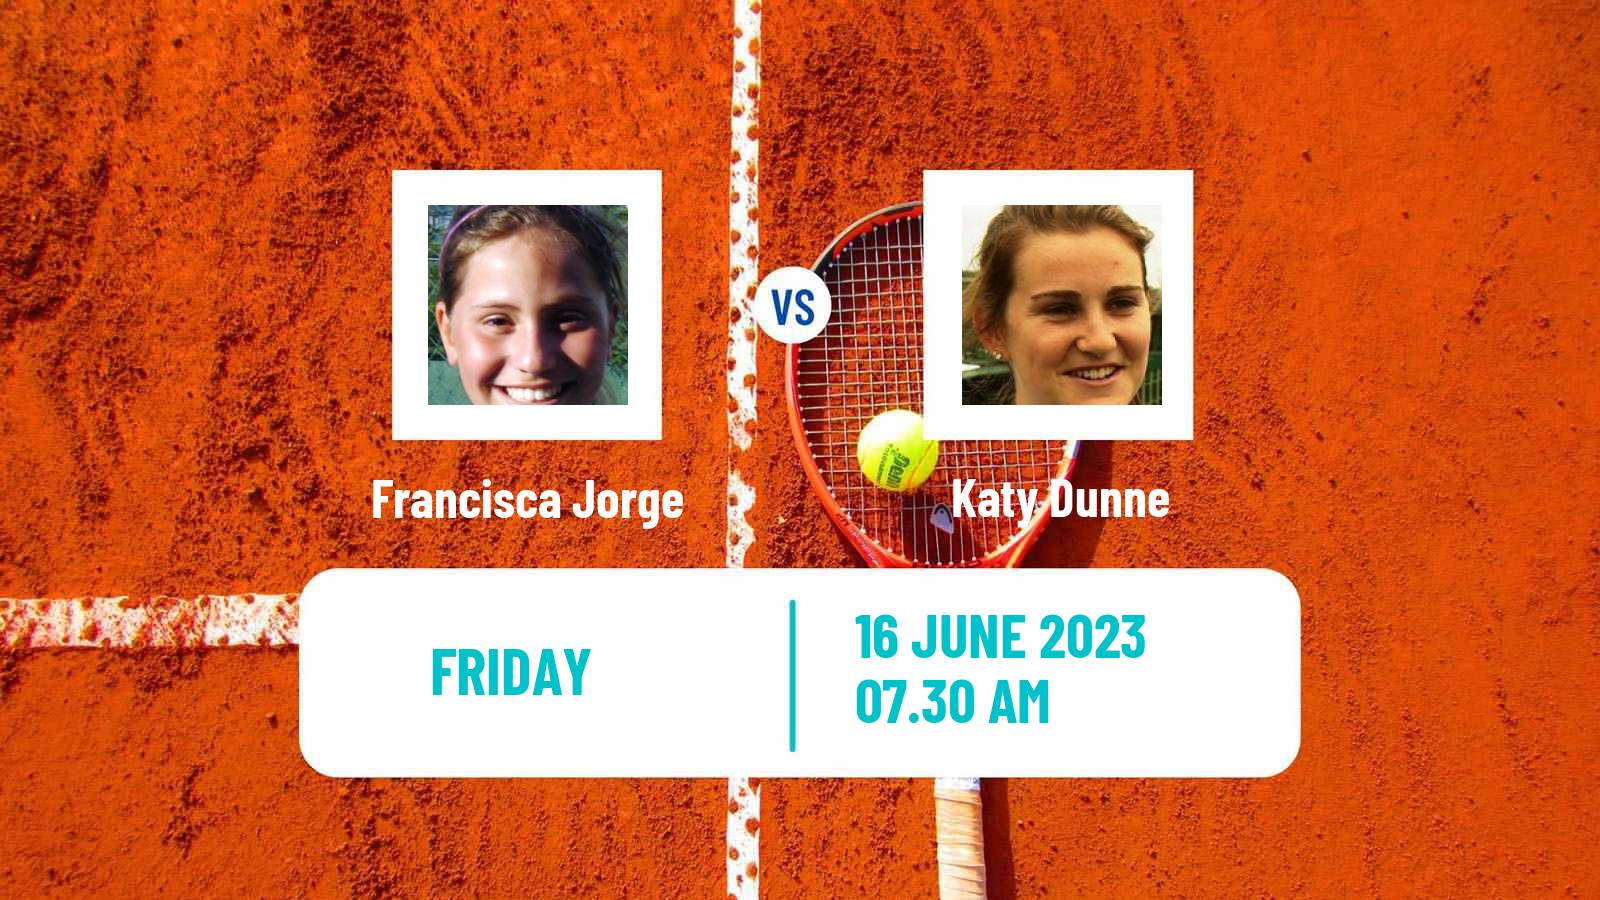 Tennis ITF W25 Guimaraes Women Francisca Jorge - Katy Dunne